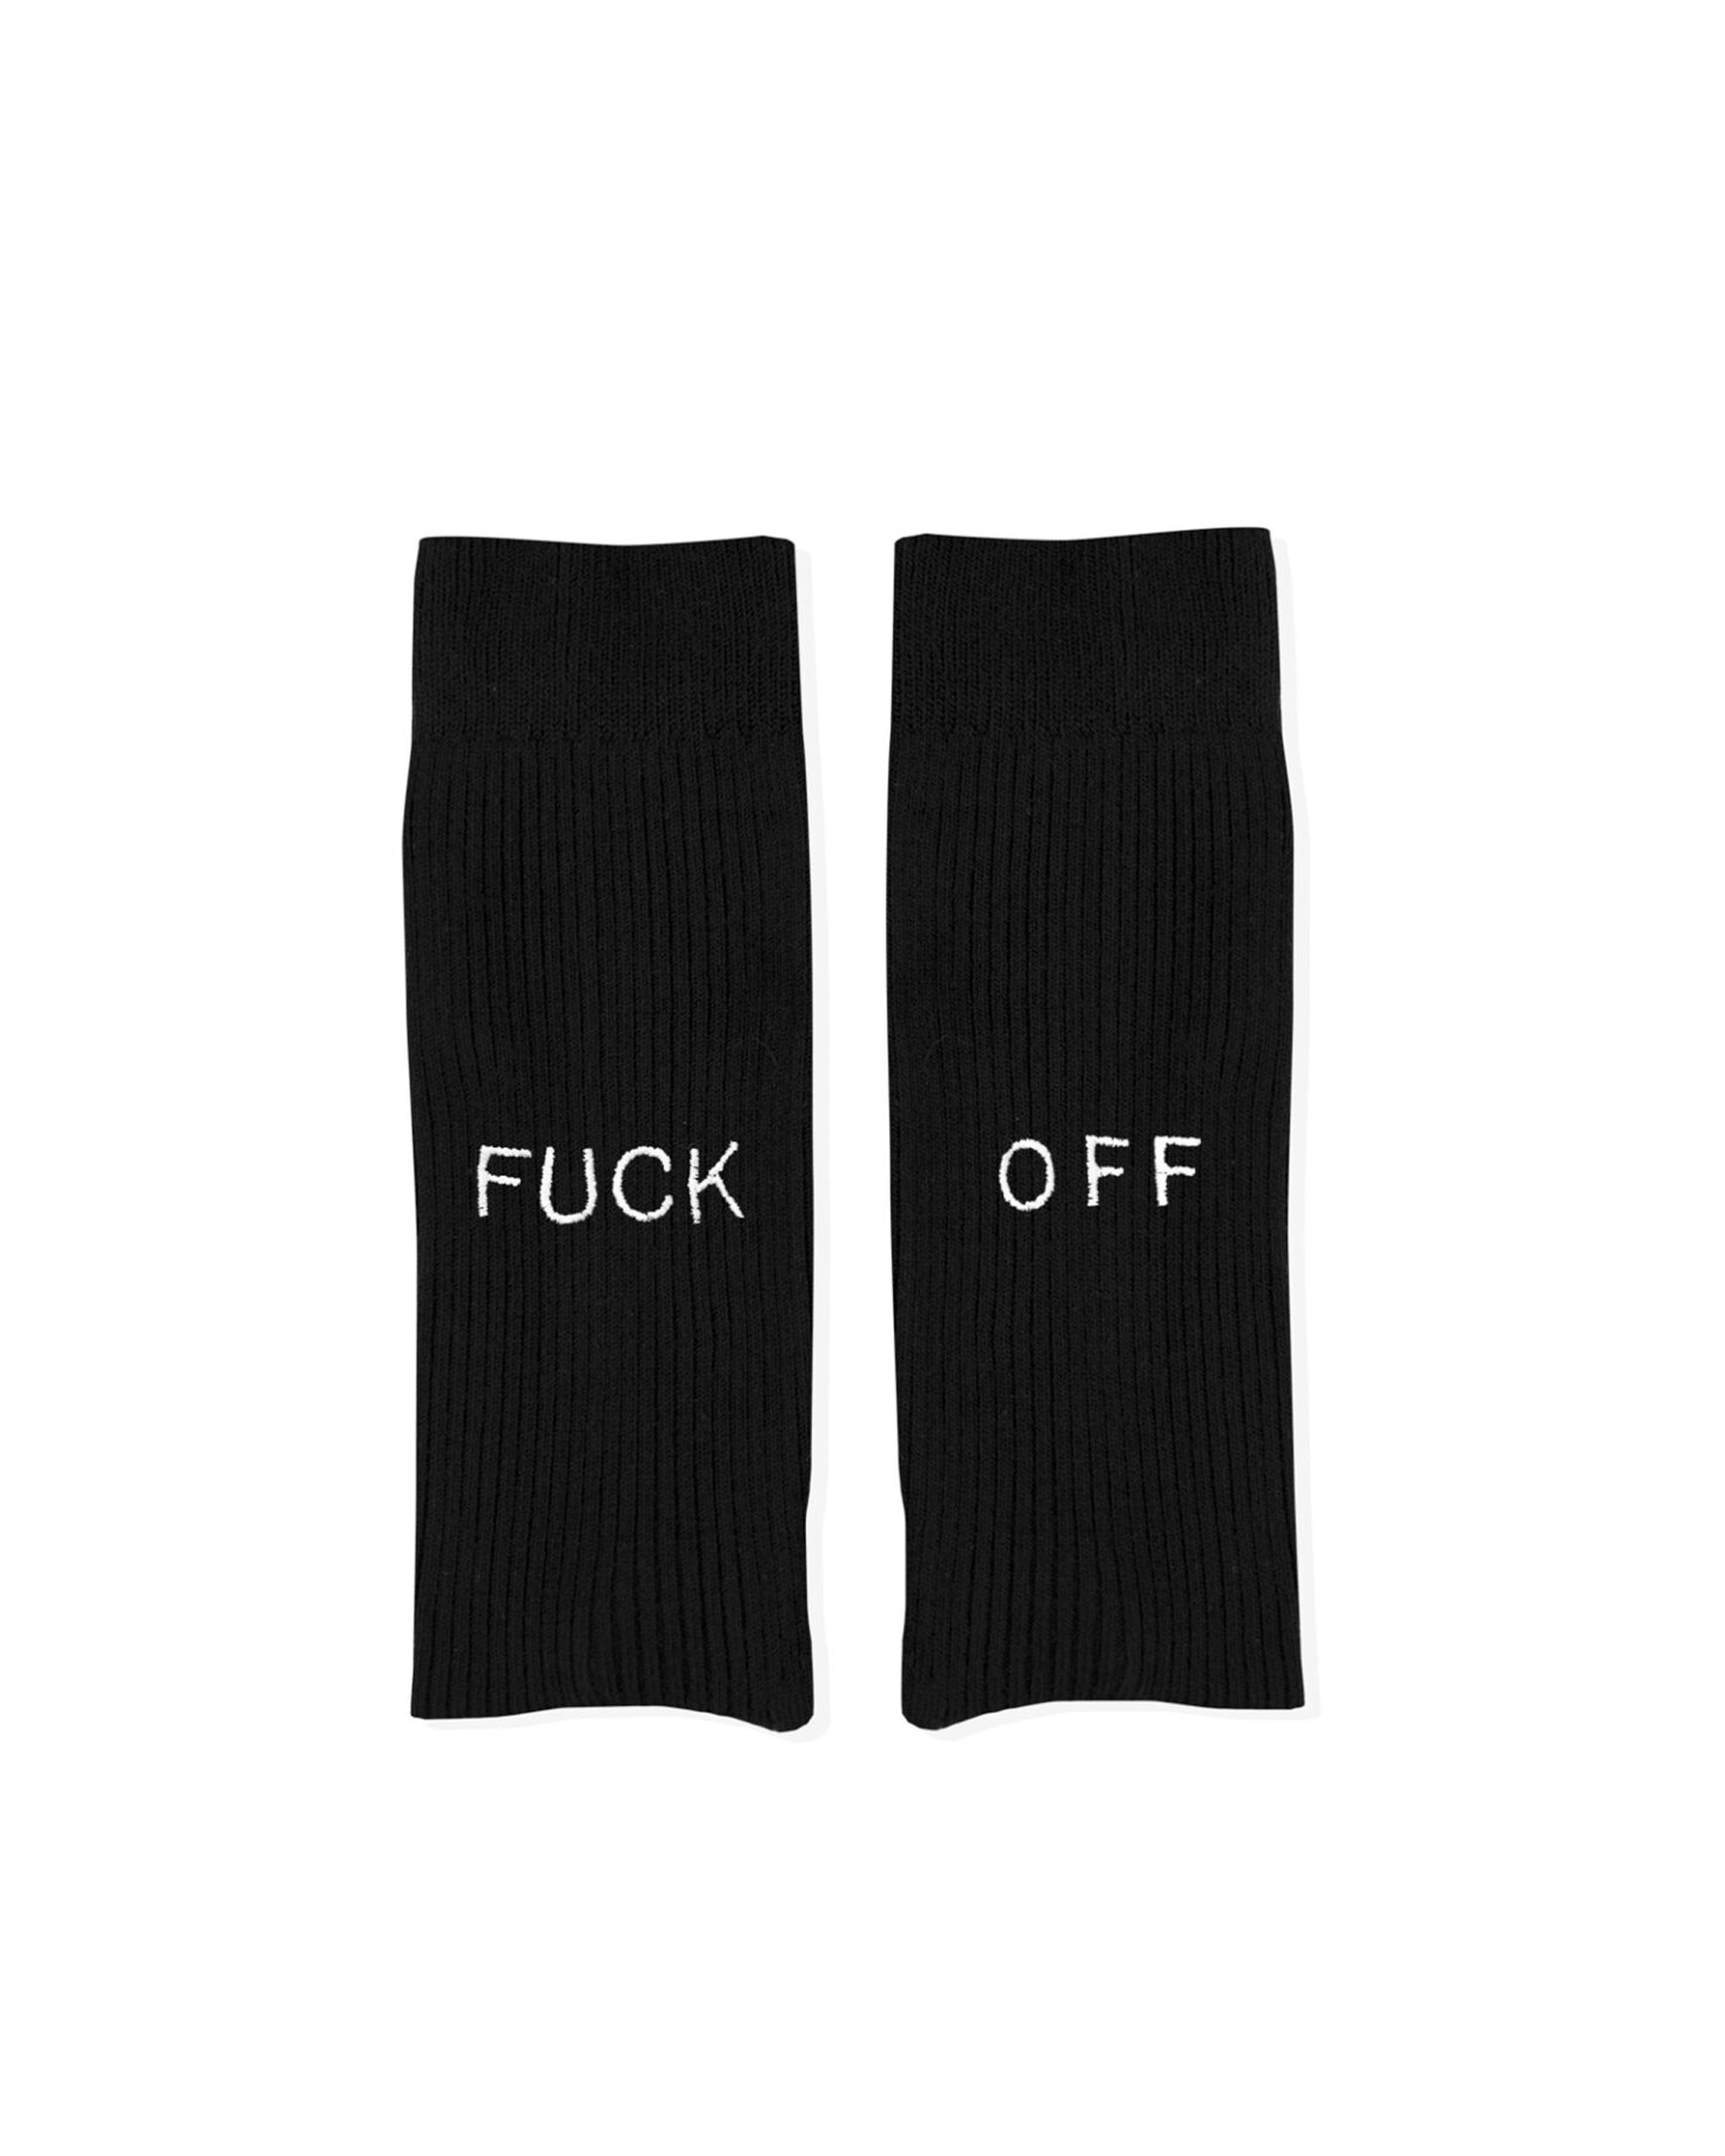 Shop Encré. Black Socks "fuck Off"